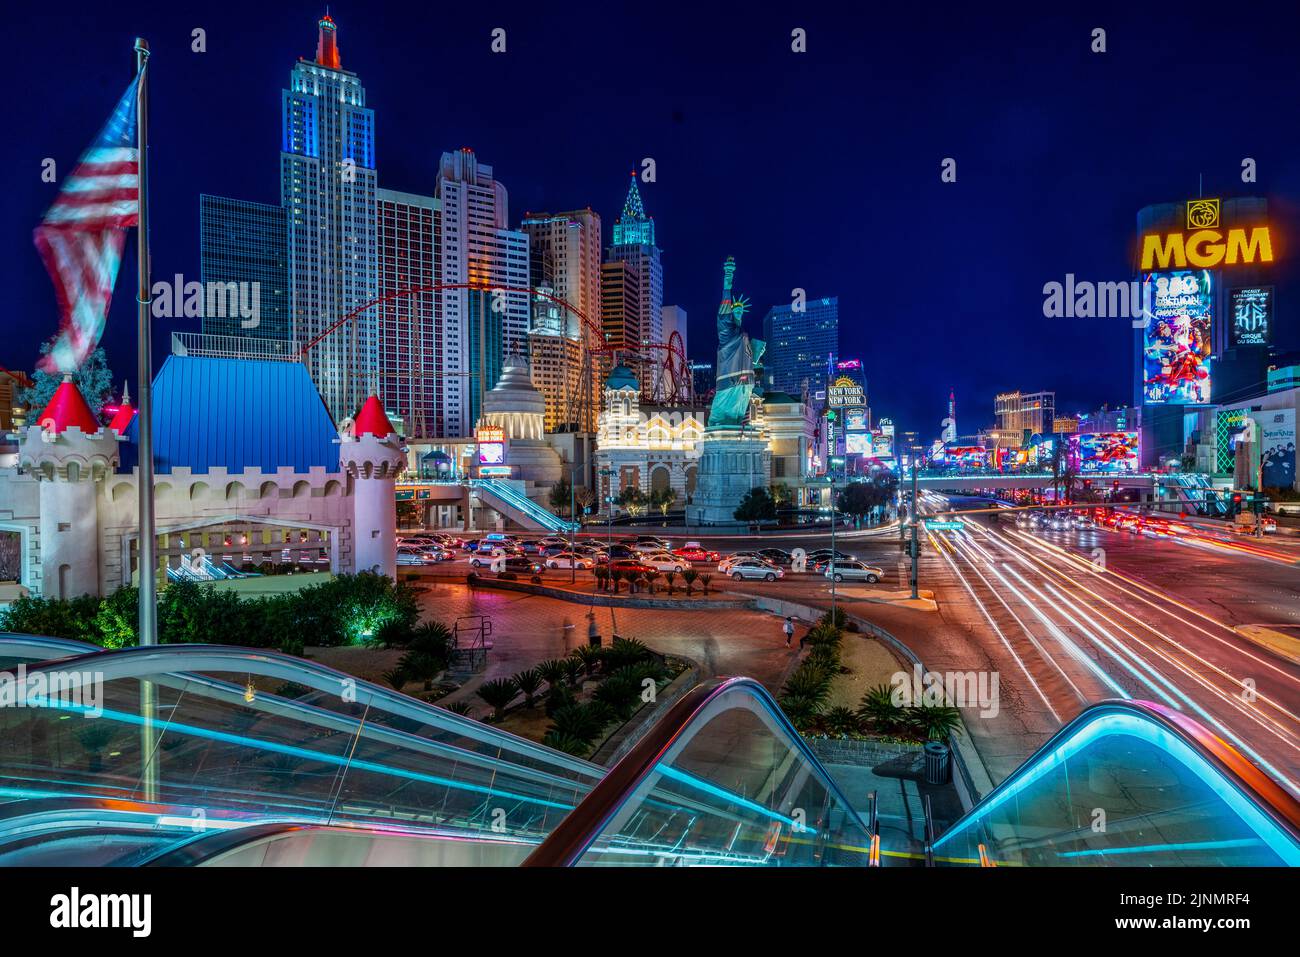 Vista notturna verso MGM Hotel e New York New York Hotel, Las Vegas, Nevada Stati Uniti, Stati Uniti Foto Stock